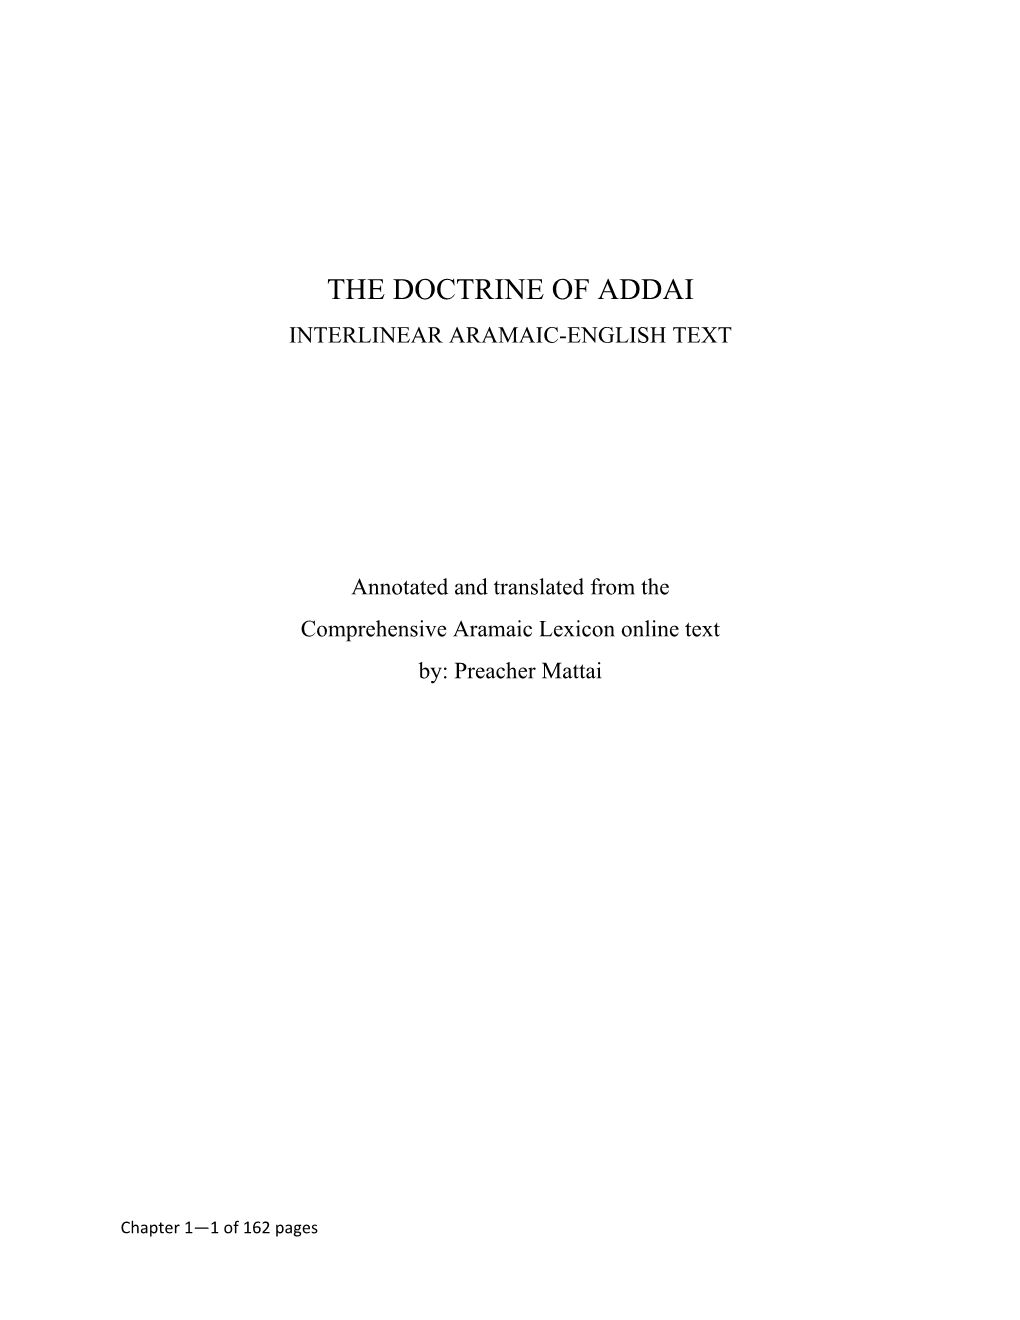 The Doctrine of Addai Interlinear Aramaic - English Text